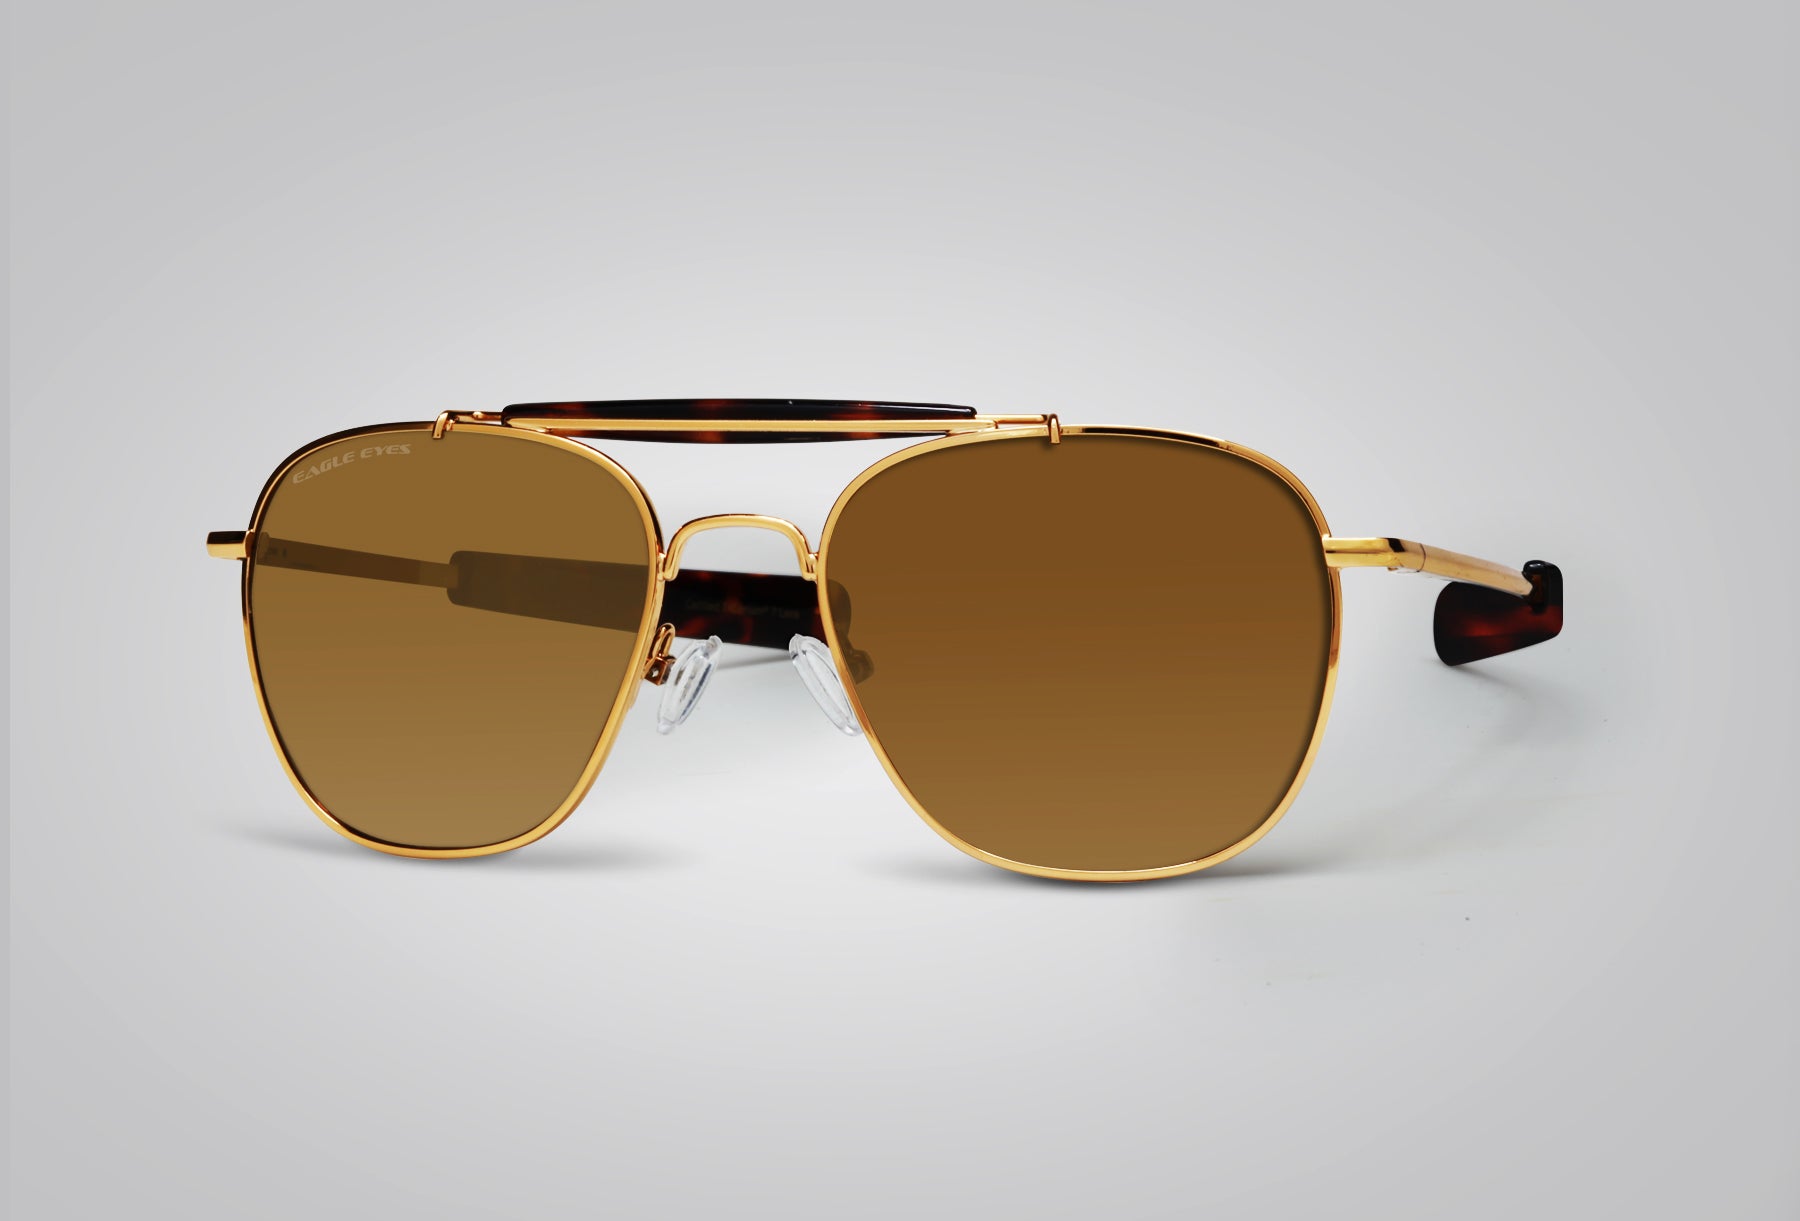 Gold Star Aviator Sunglasses - Polliwogs Children's Boutique